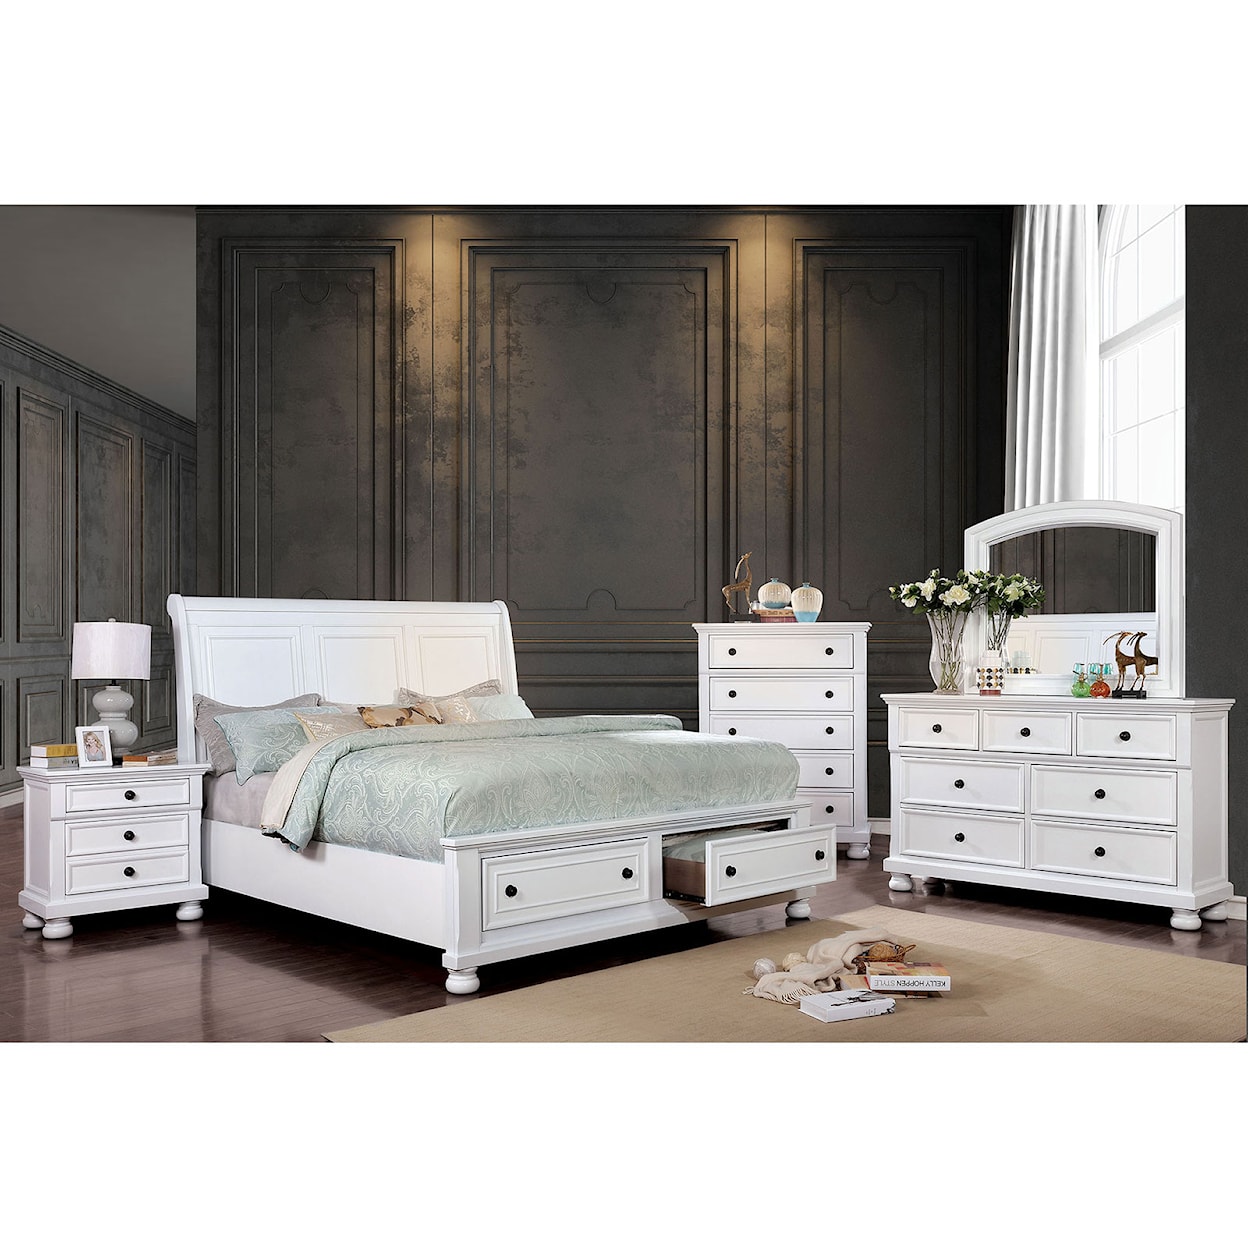 Furniture of America Castor California King Bedroom Set